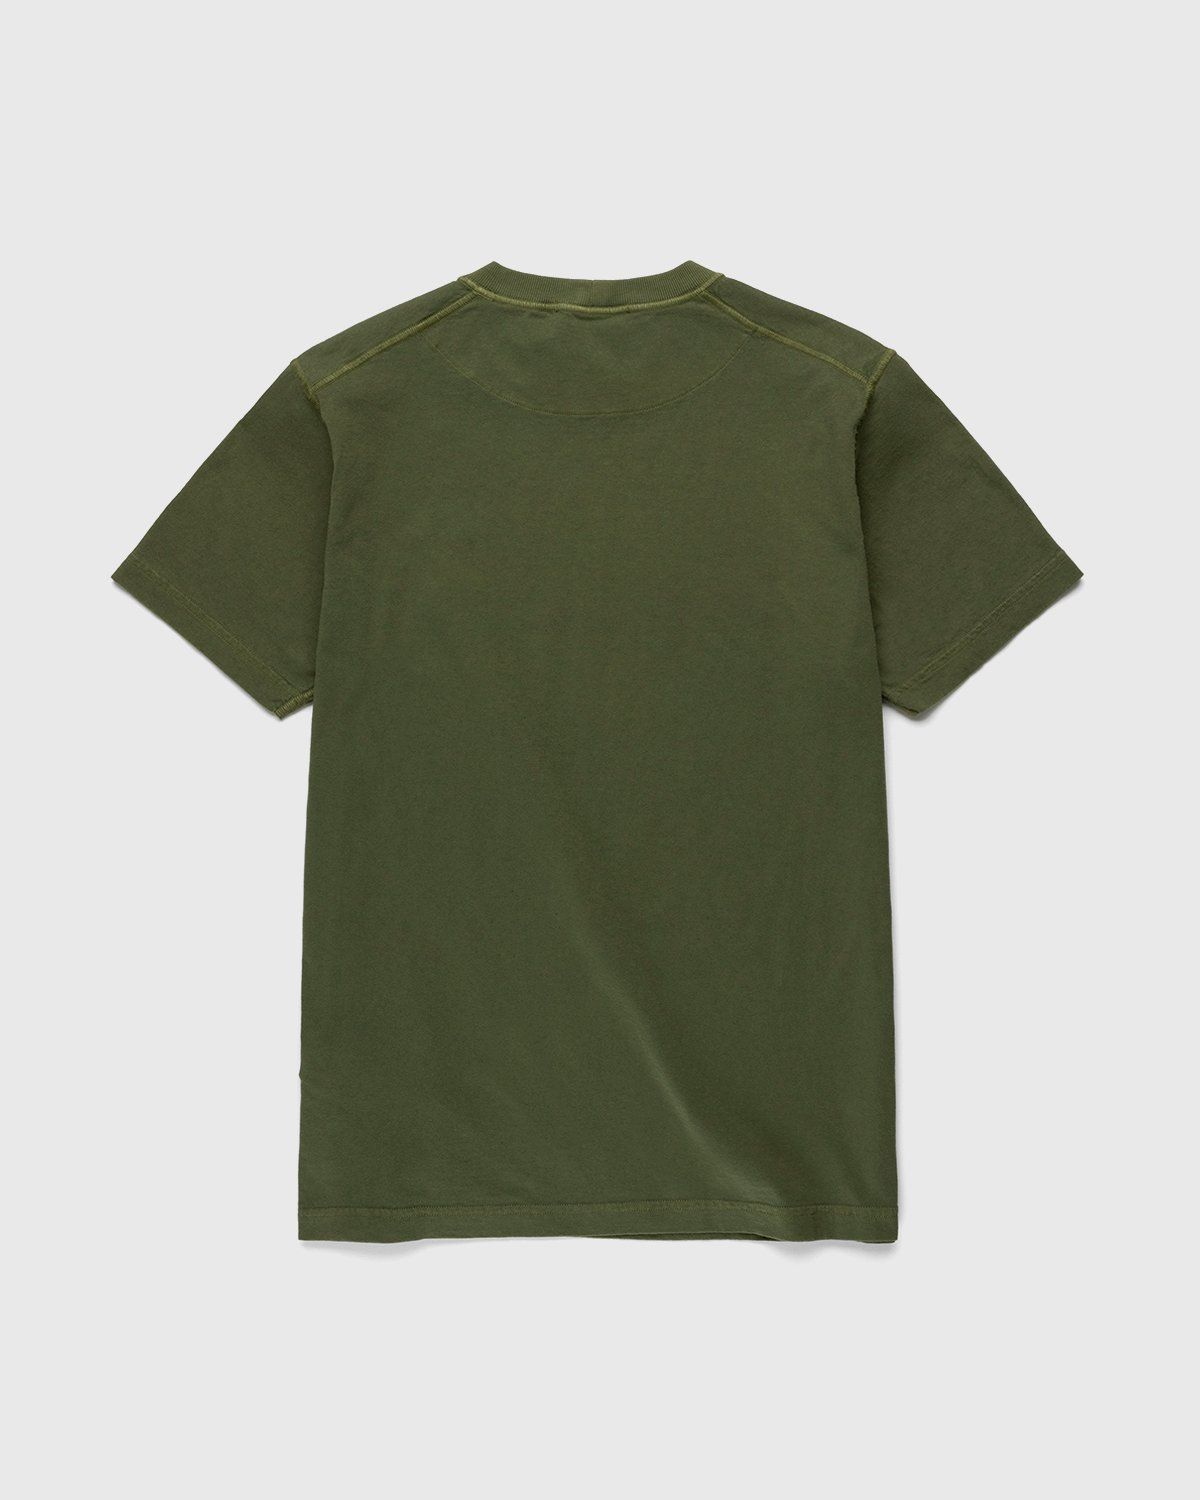 Stone Island – 23757 Garment-Dyed Fissato T-Shirt Olive Green - Image 2